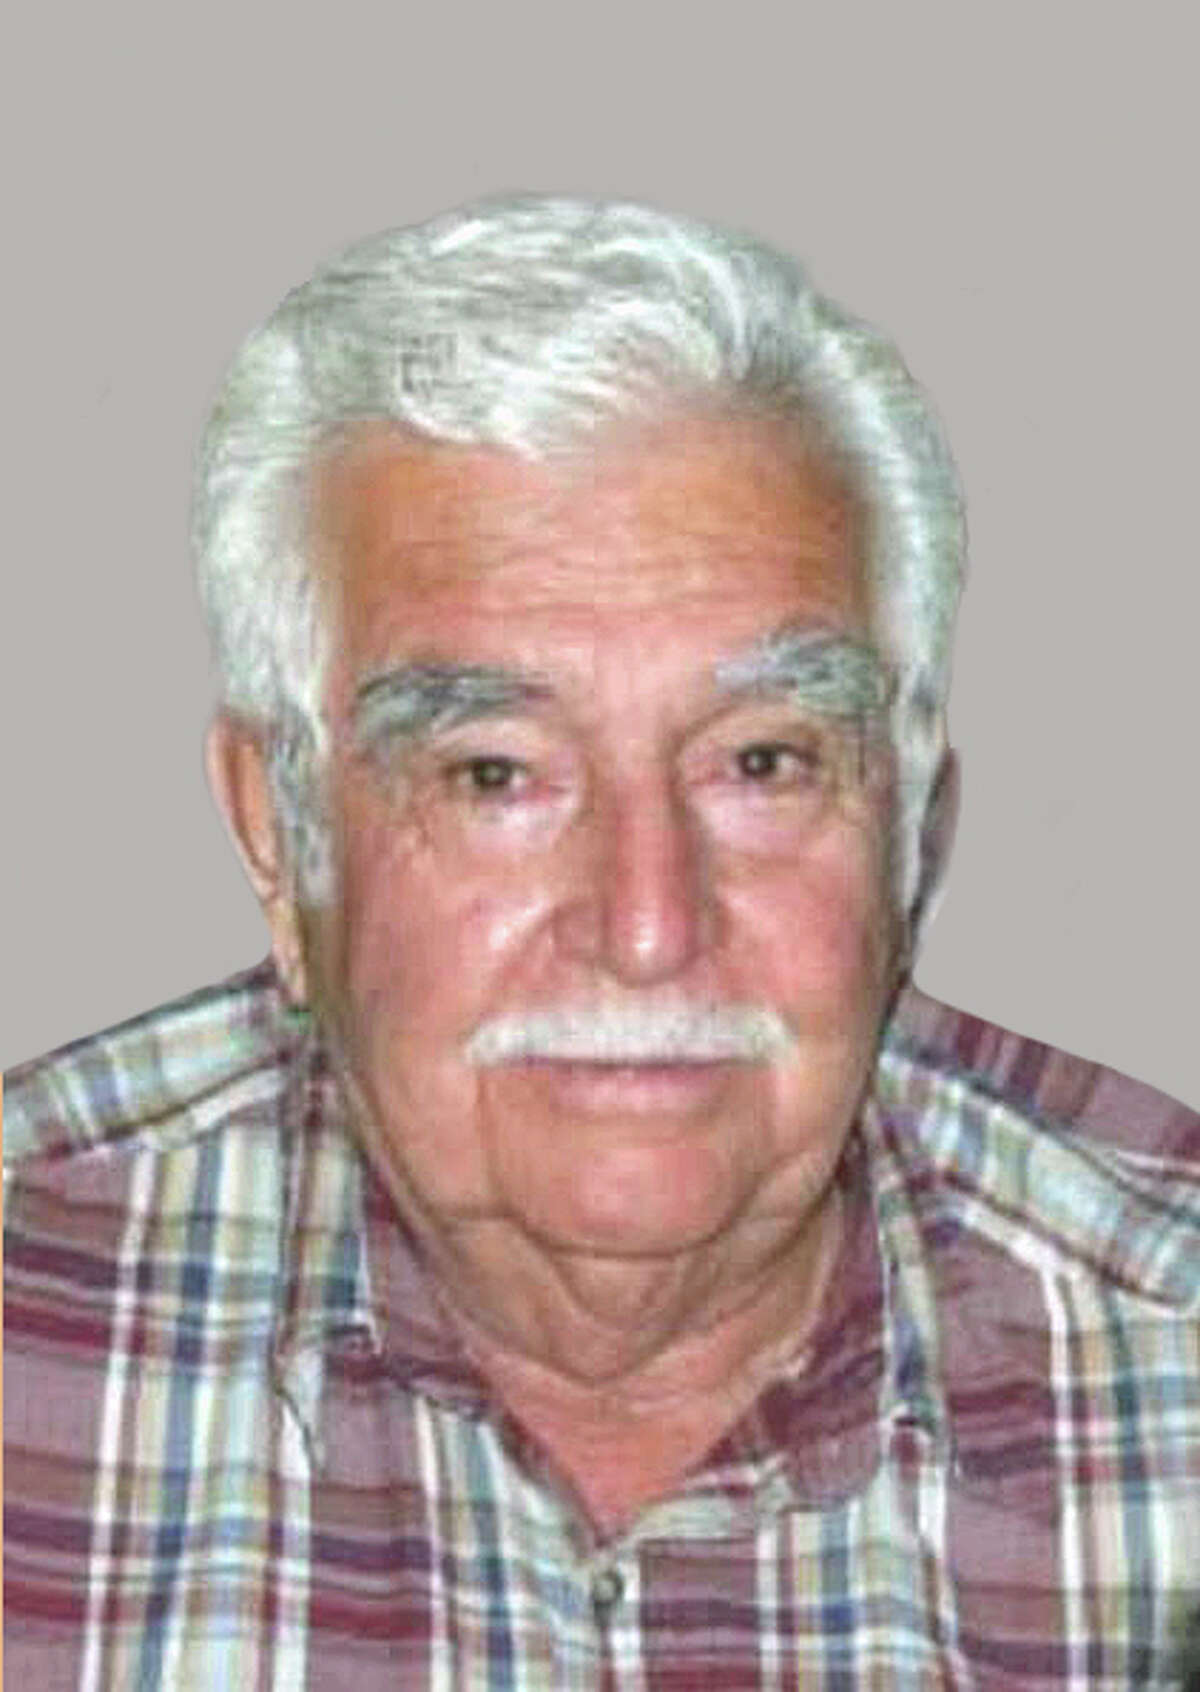 Viegilio Ayala Quiroga